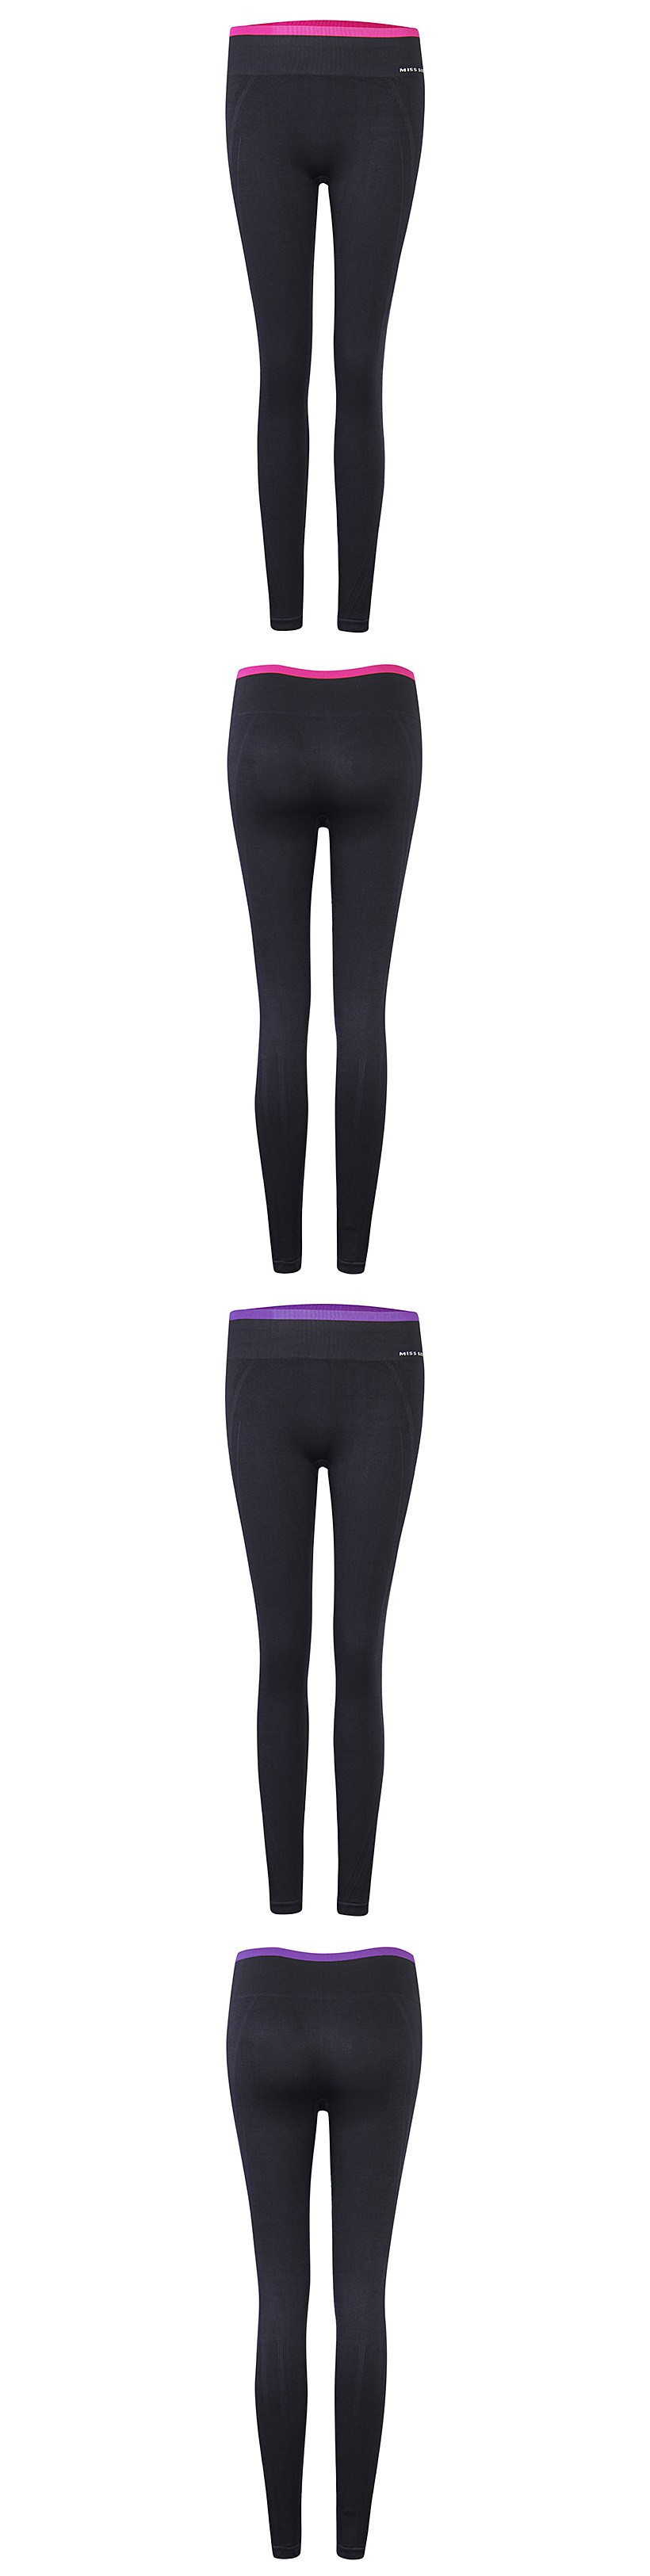 Women-Yoga-Leggings-Sports-Elastic-Slimming-Tights-Gym-Running-Pants-Fitness-Trousers-1070565-1